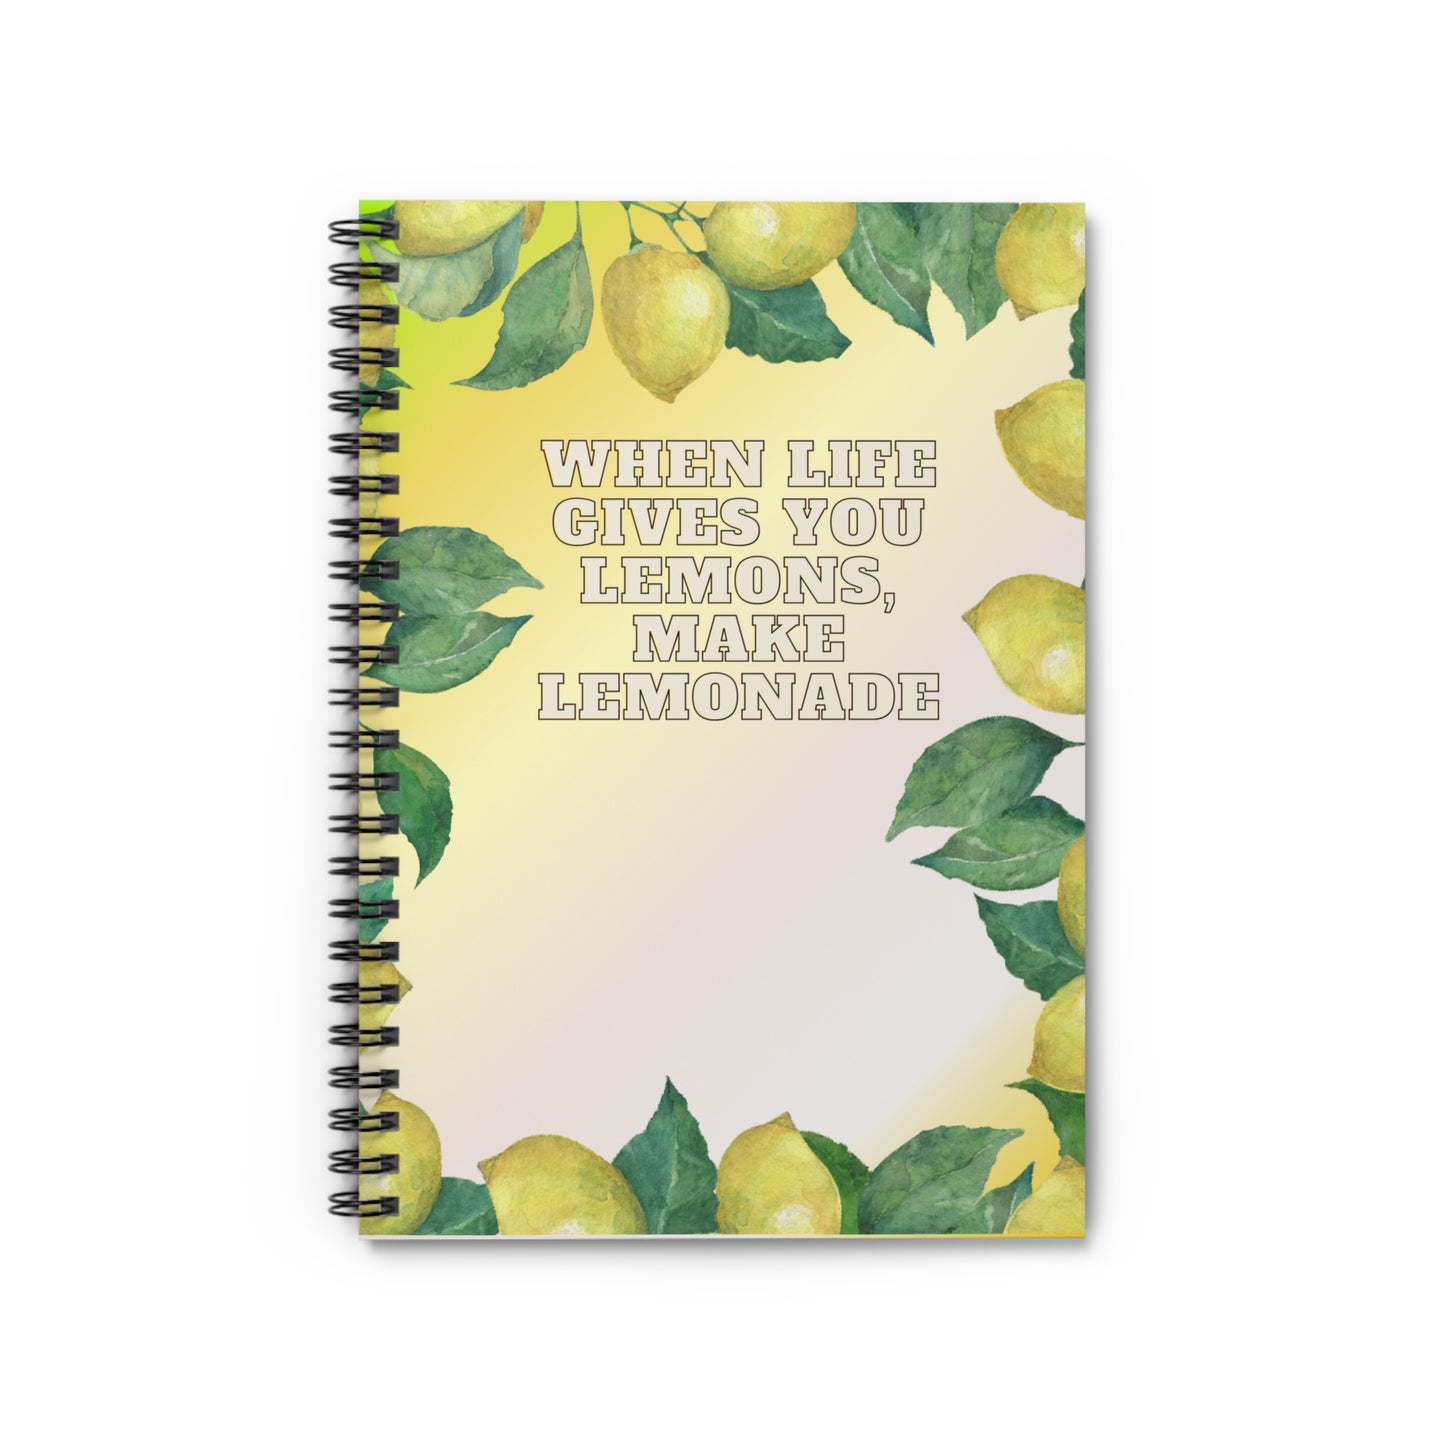 Lemonade Stand -Spiral Notebook - When Life gives you lemons